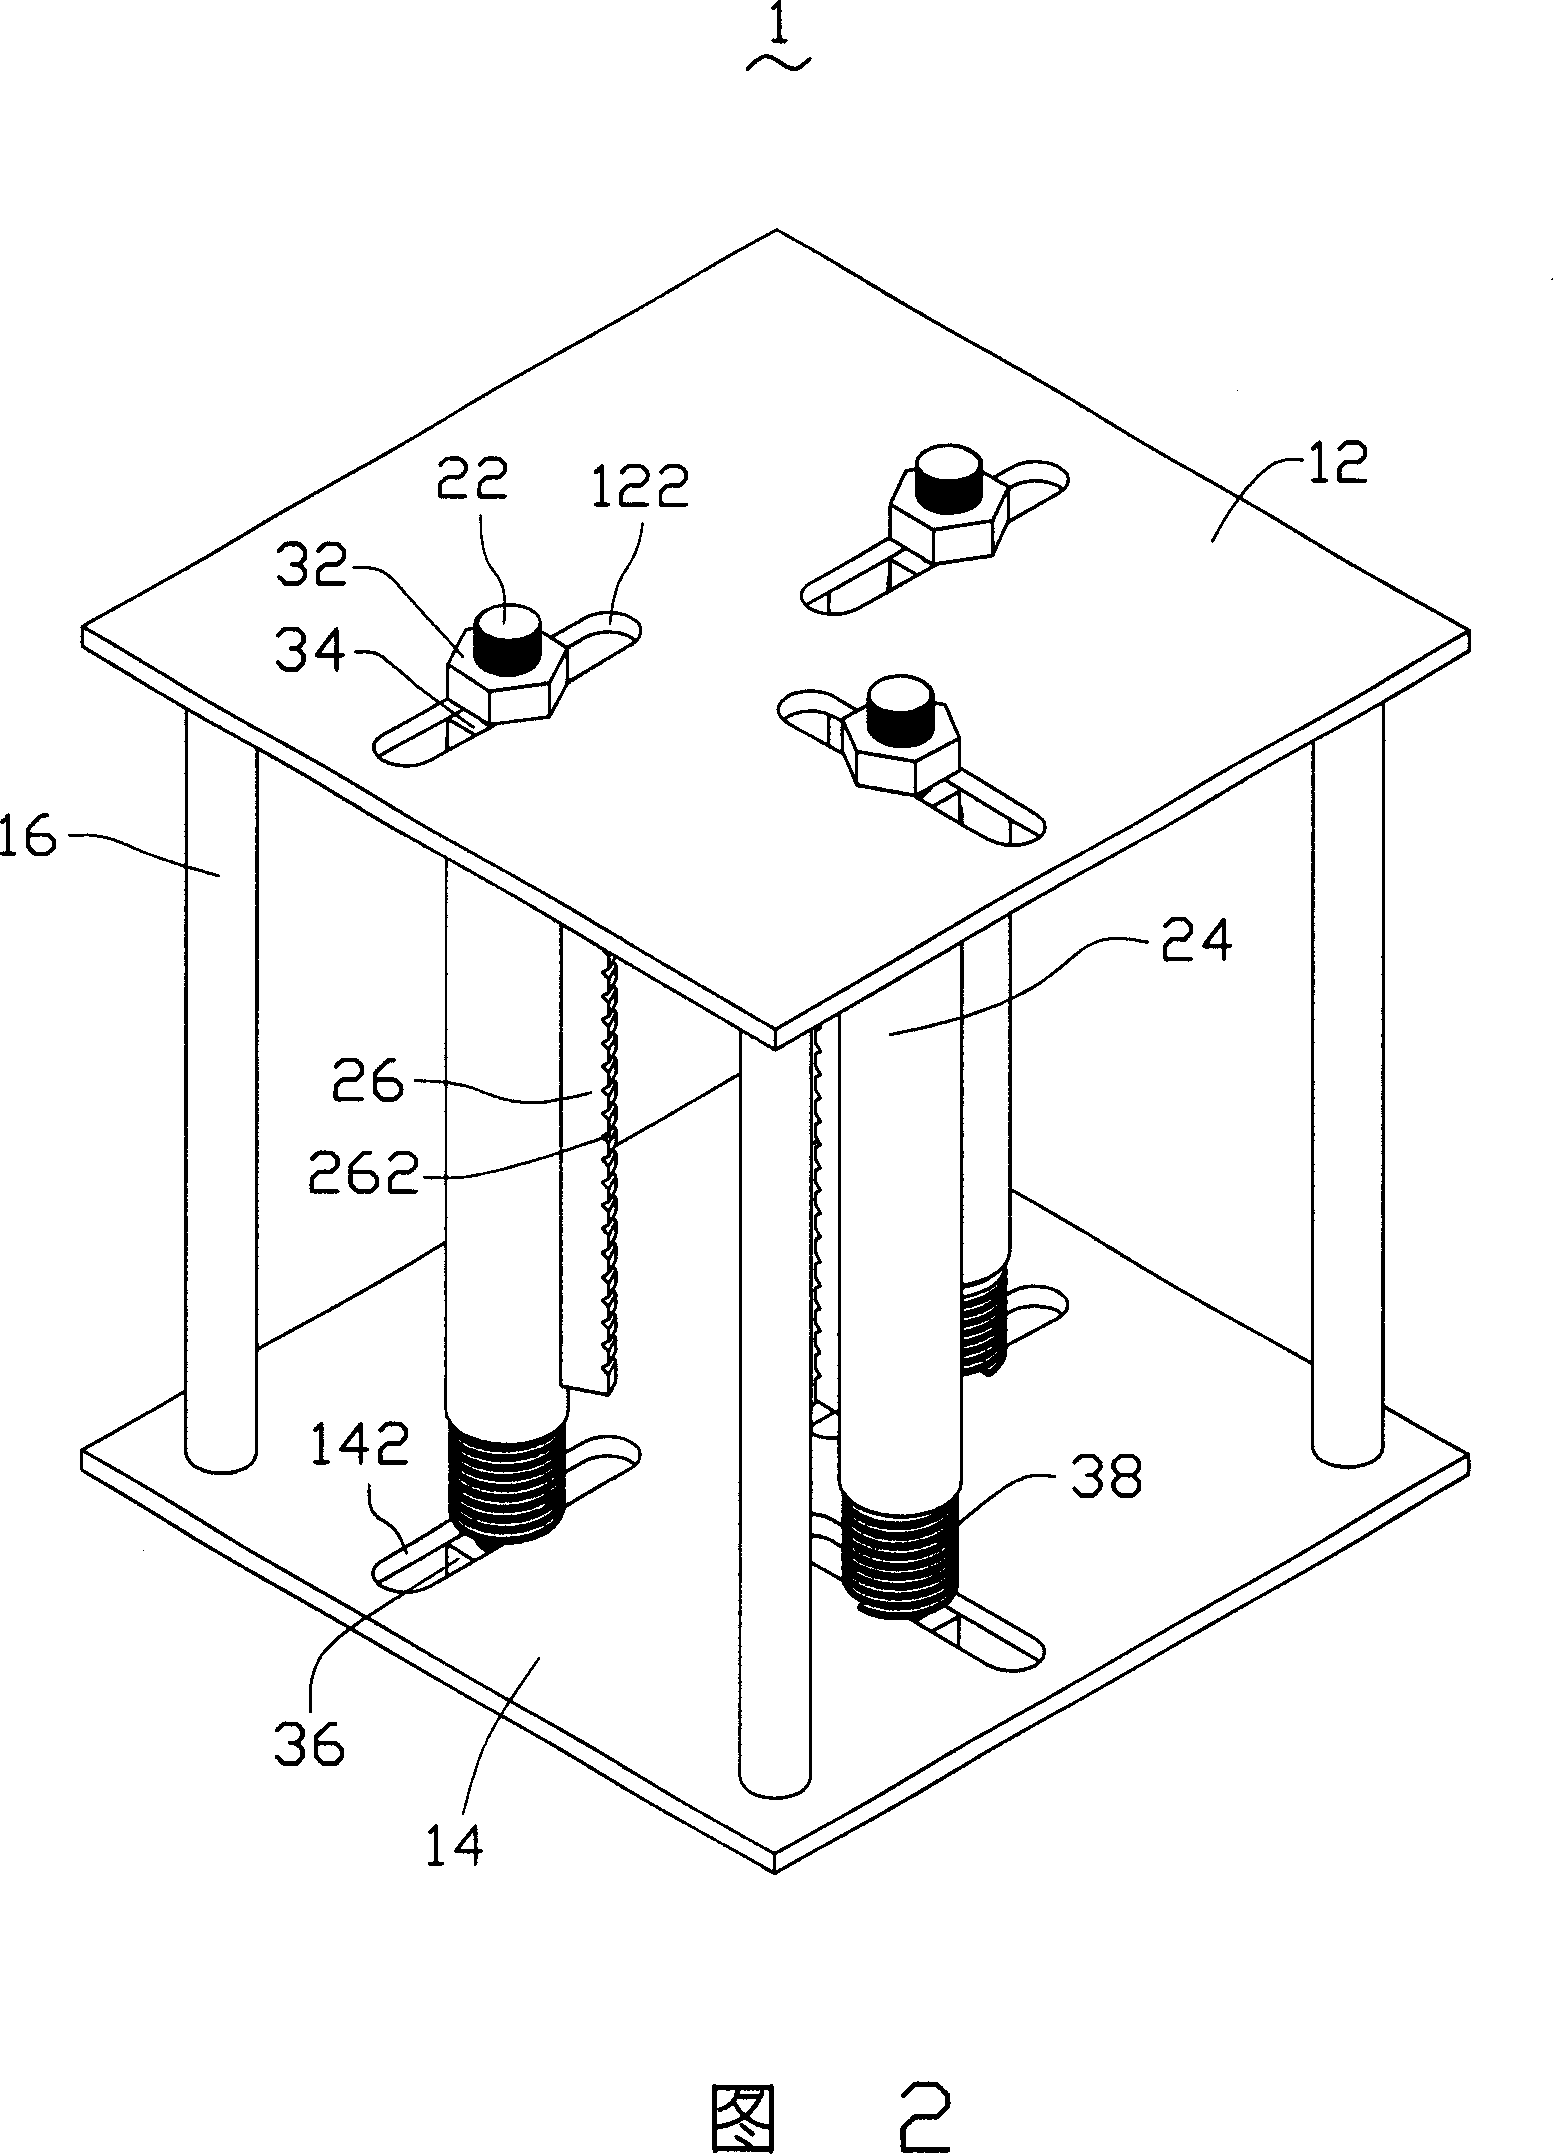 Optical-element washing structure